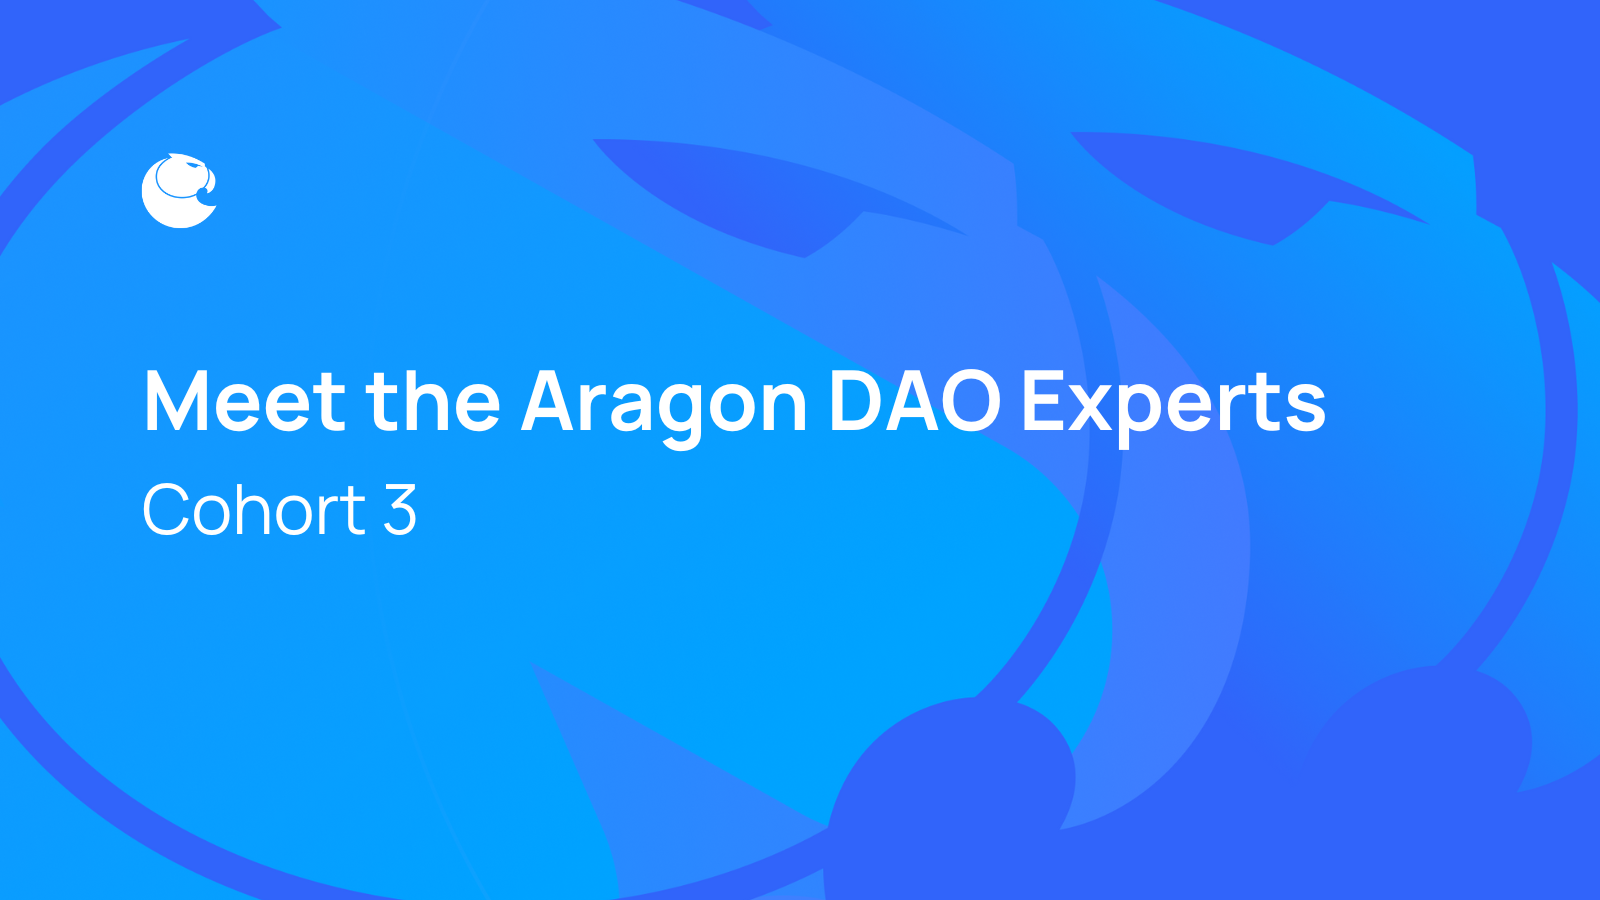 Meet the Aragon DAO Experts: Cohort 3